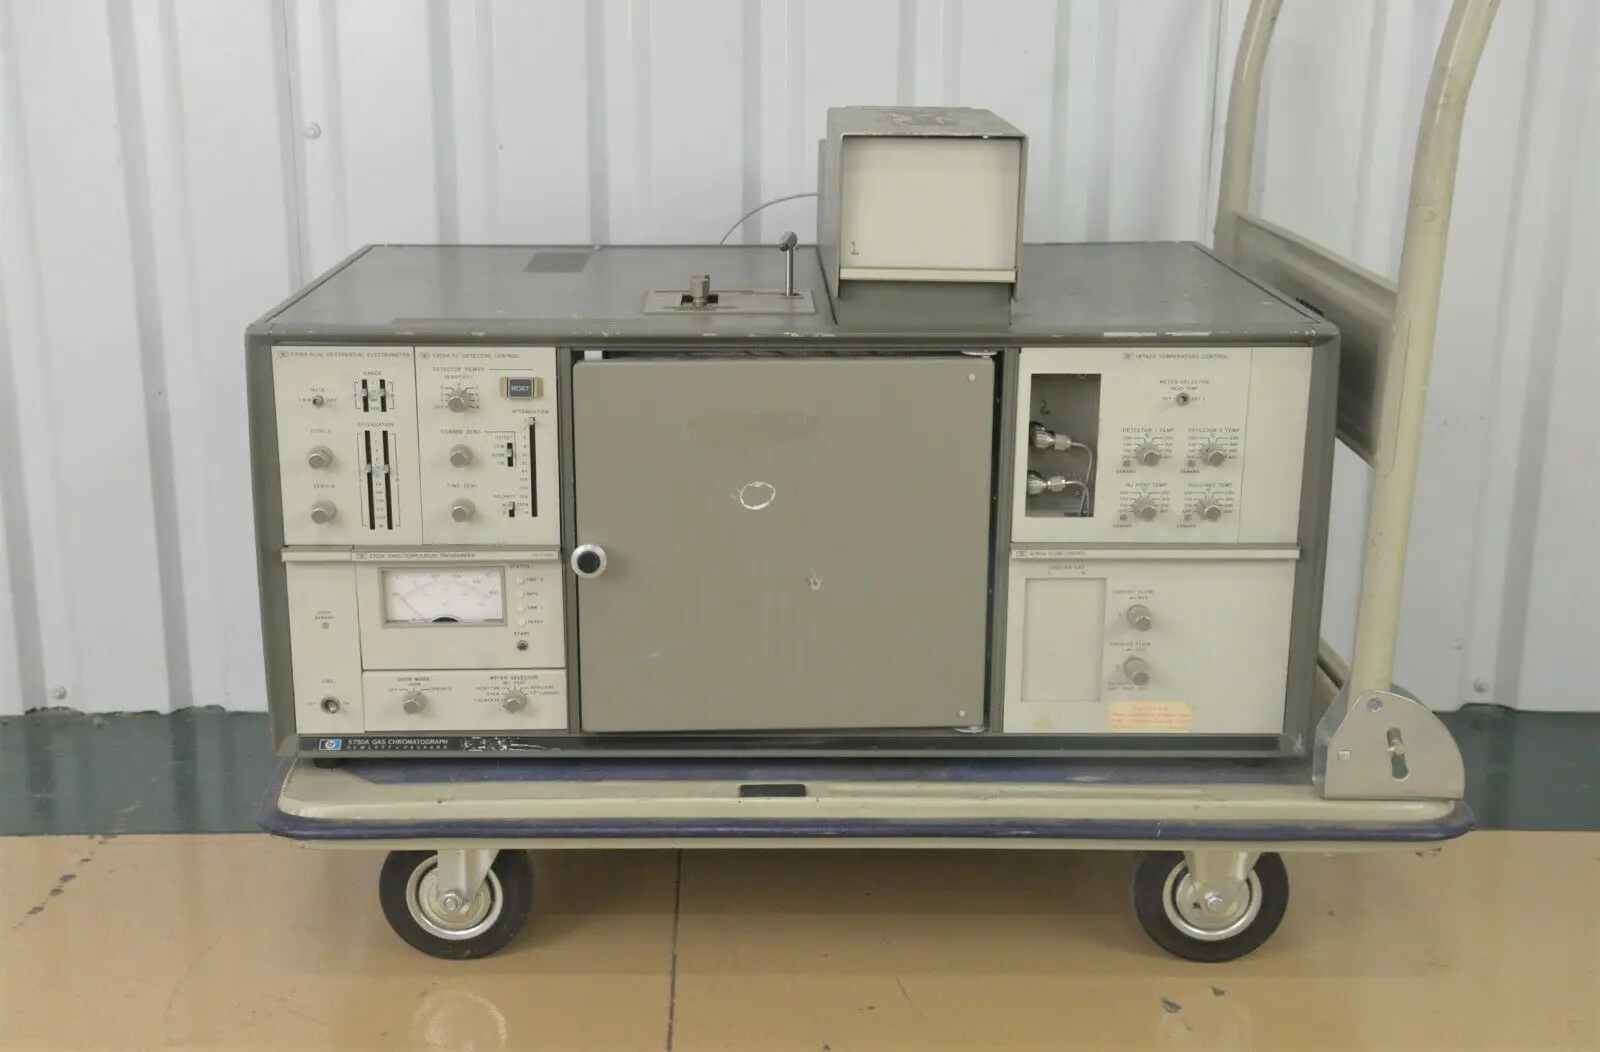 hewlett packard model 5830a gas chromatograph igc - How do you clean a gas chromatograph